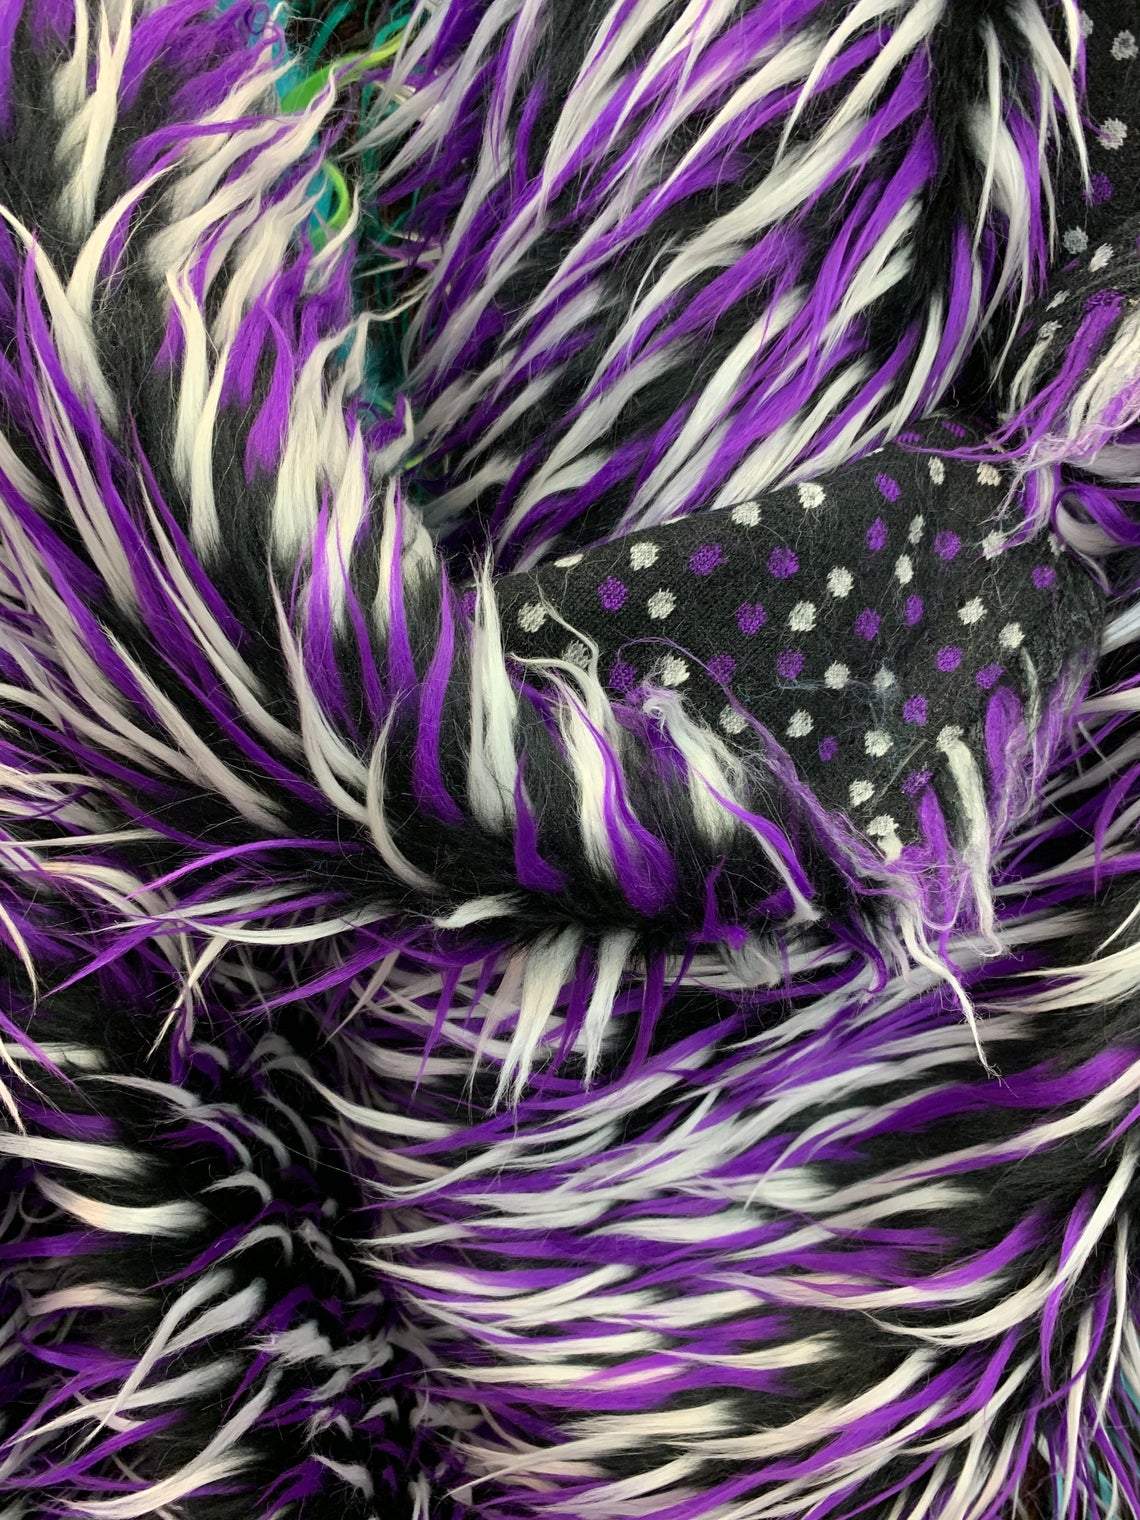 3 Tone Long Pile Design 60 Inches Wide Faux Fur Fake FabricICE FABRICSICE FABRICSPurple White BlackBy The Yard (60 inches Wide)3 Tone Long Pile Design 60 Inches Wide Faux Fur Fake Fabric ICE FABRICS |Purple White Black